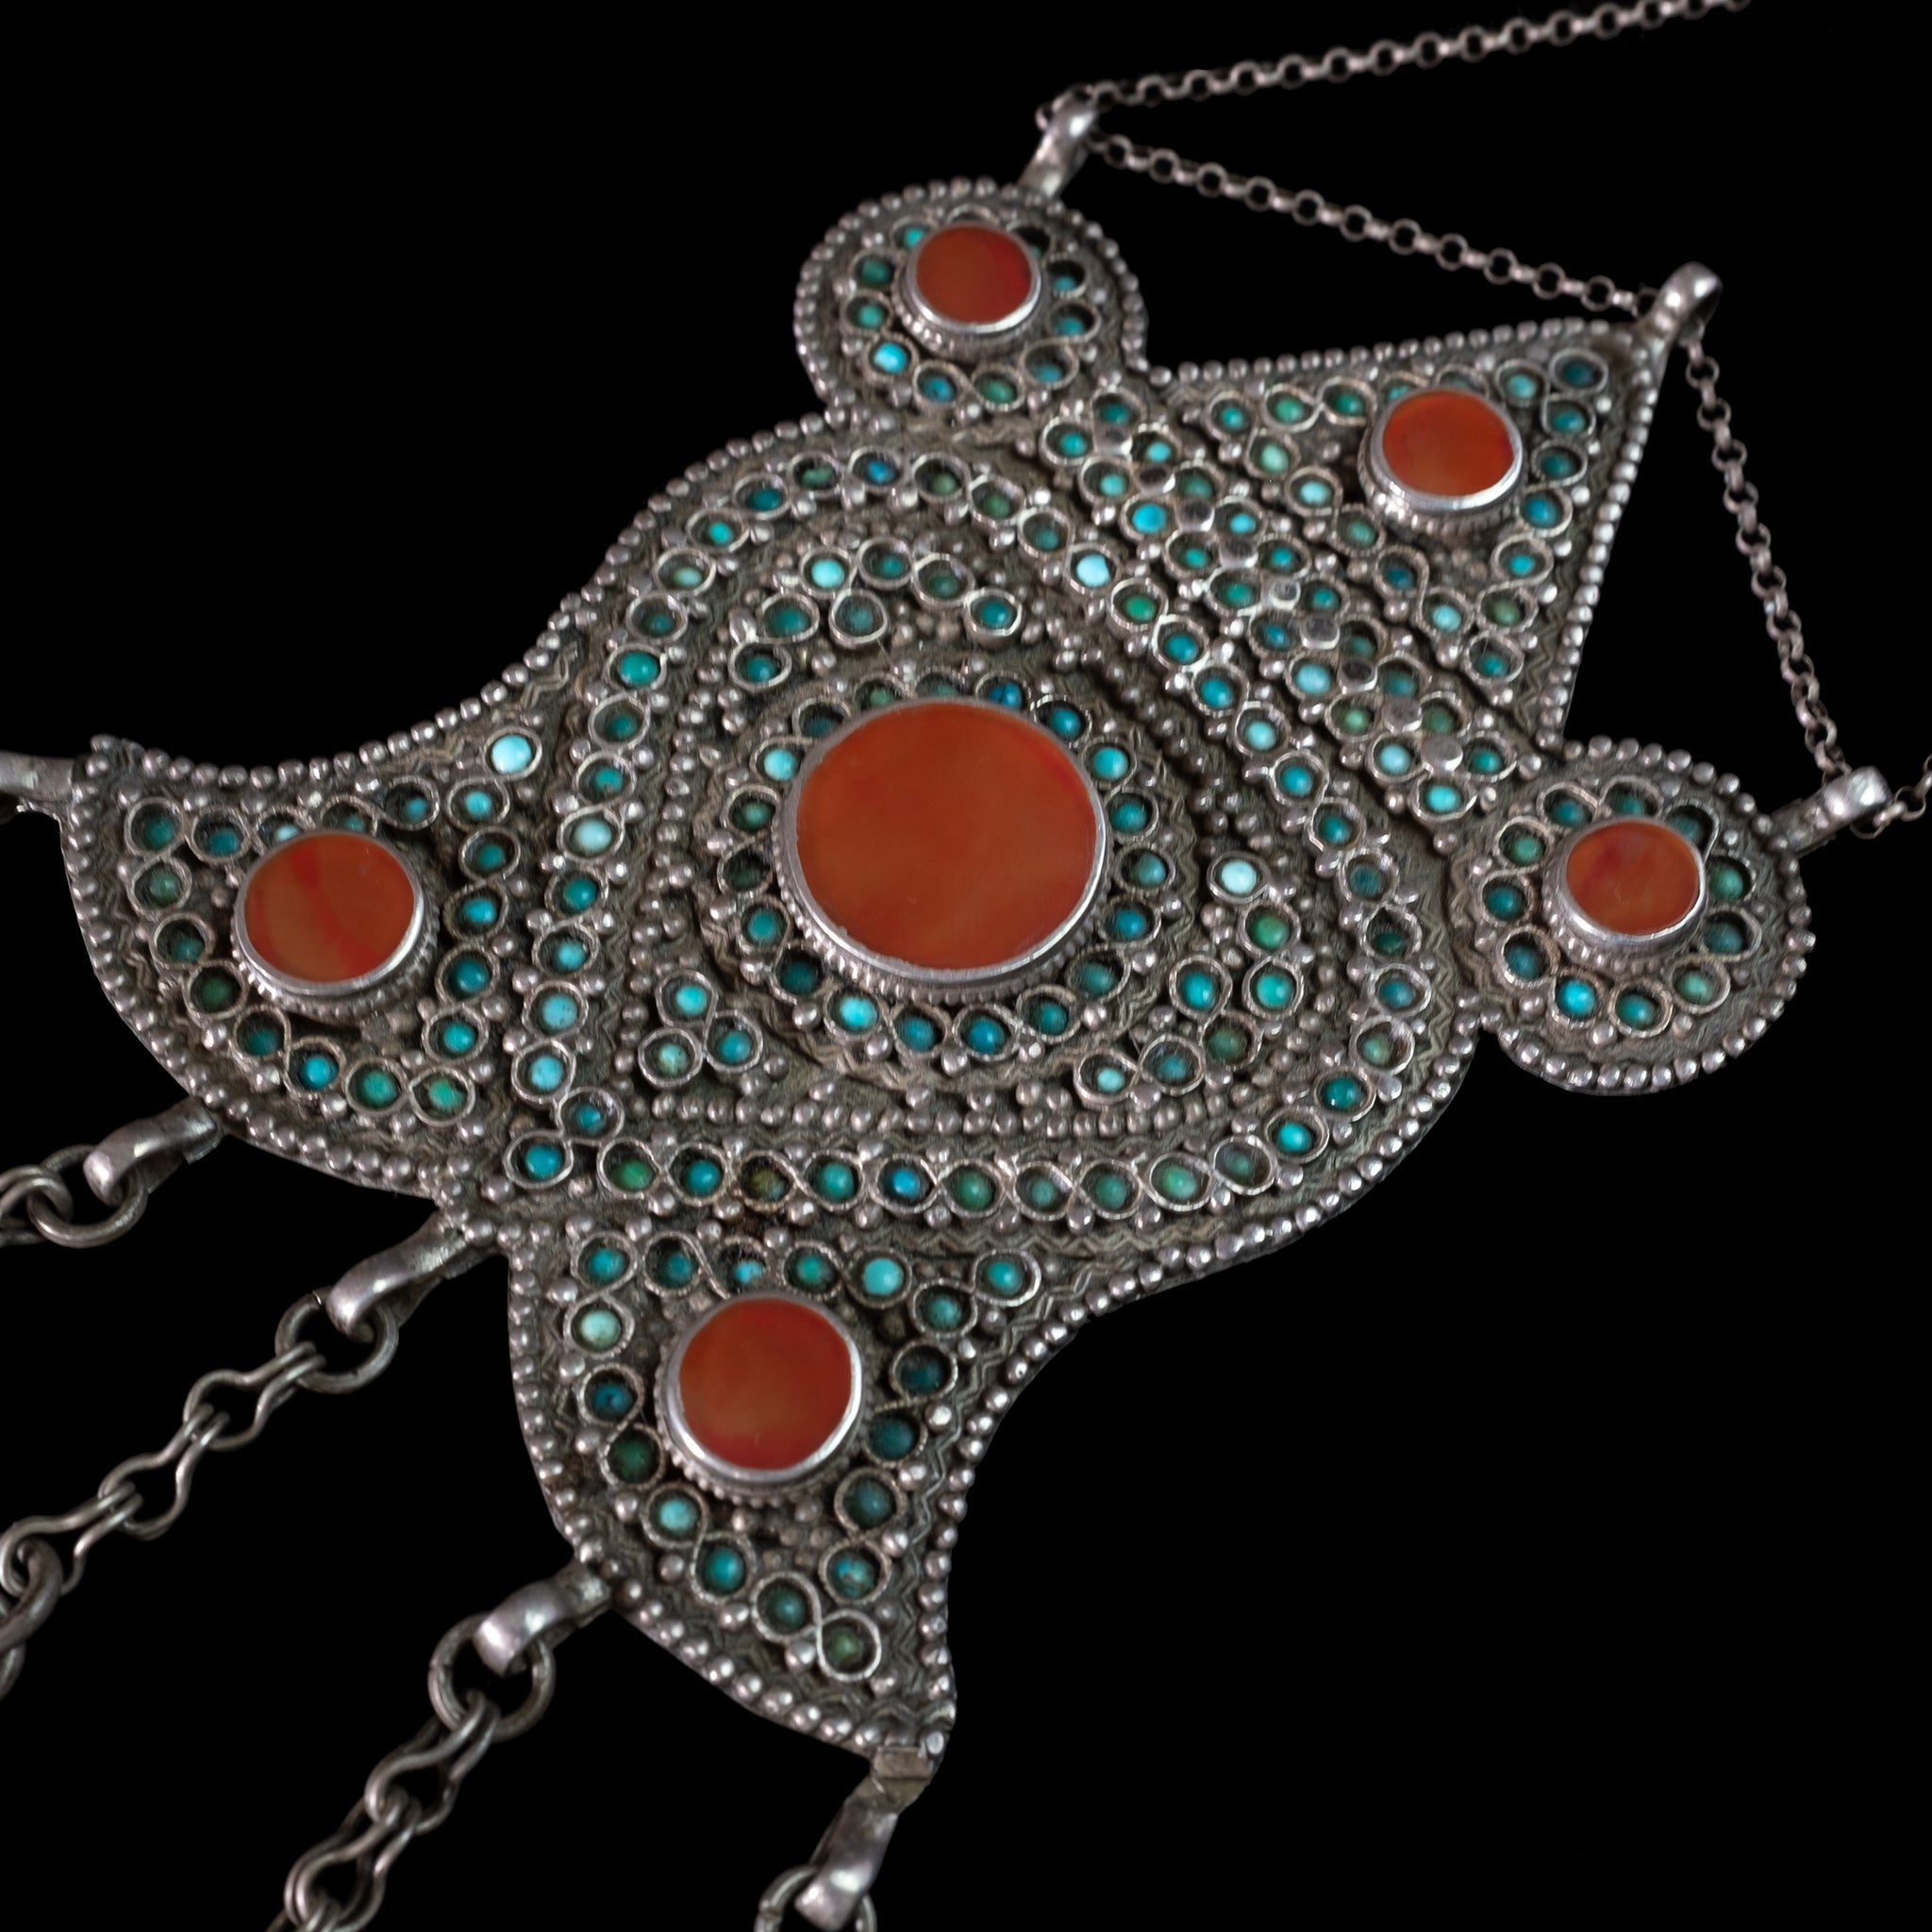 RARE Antique Silver, Carnelian & Turquoise Pendant, Bukhara, Uzbekistan